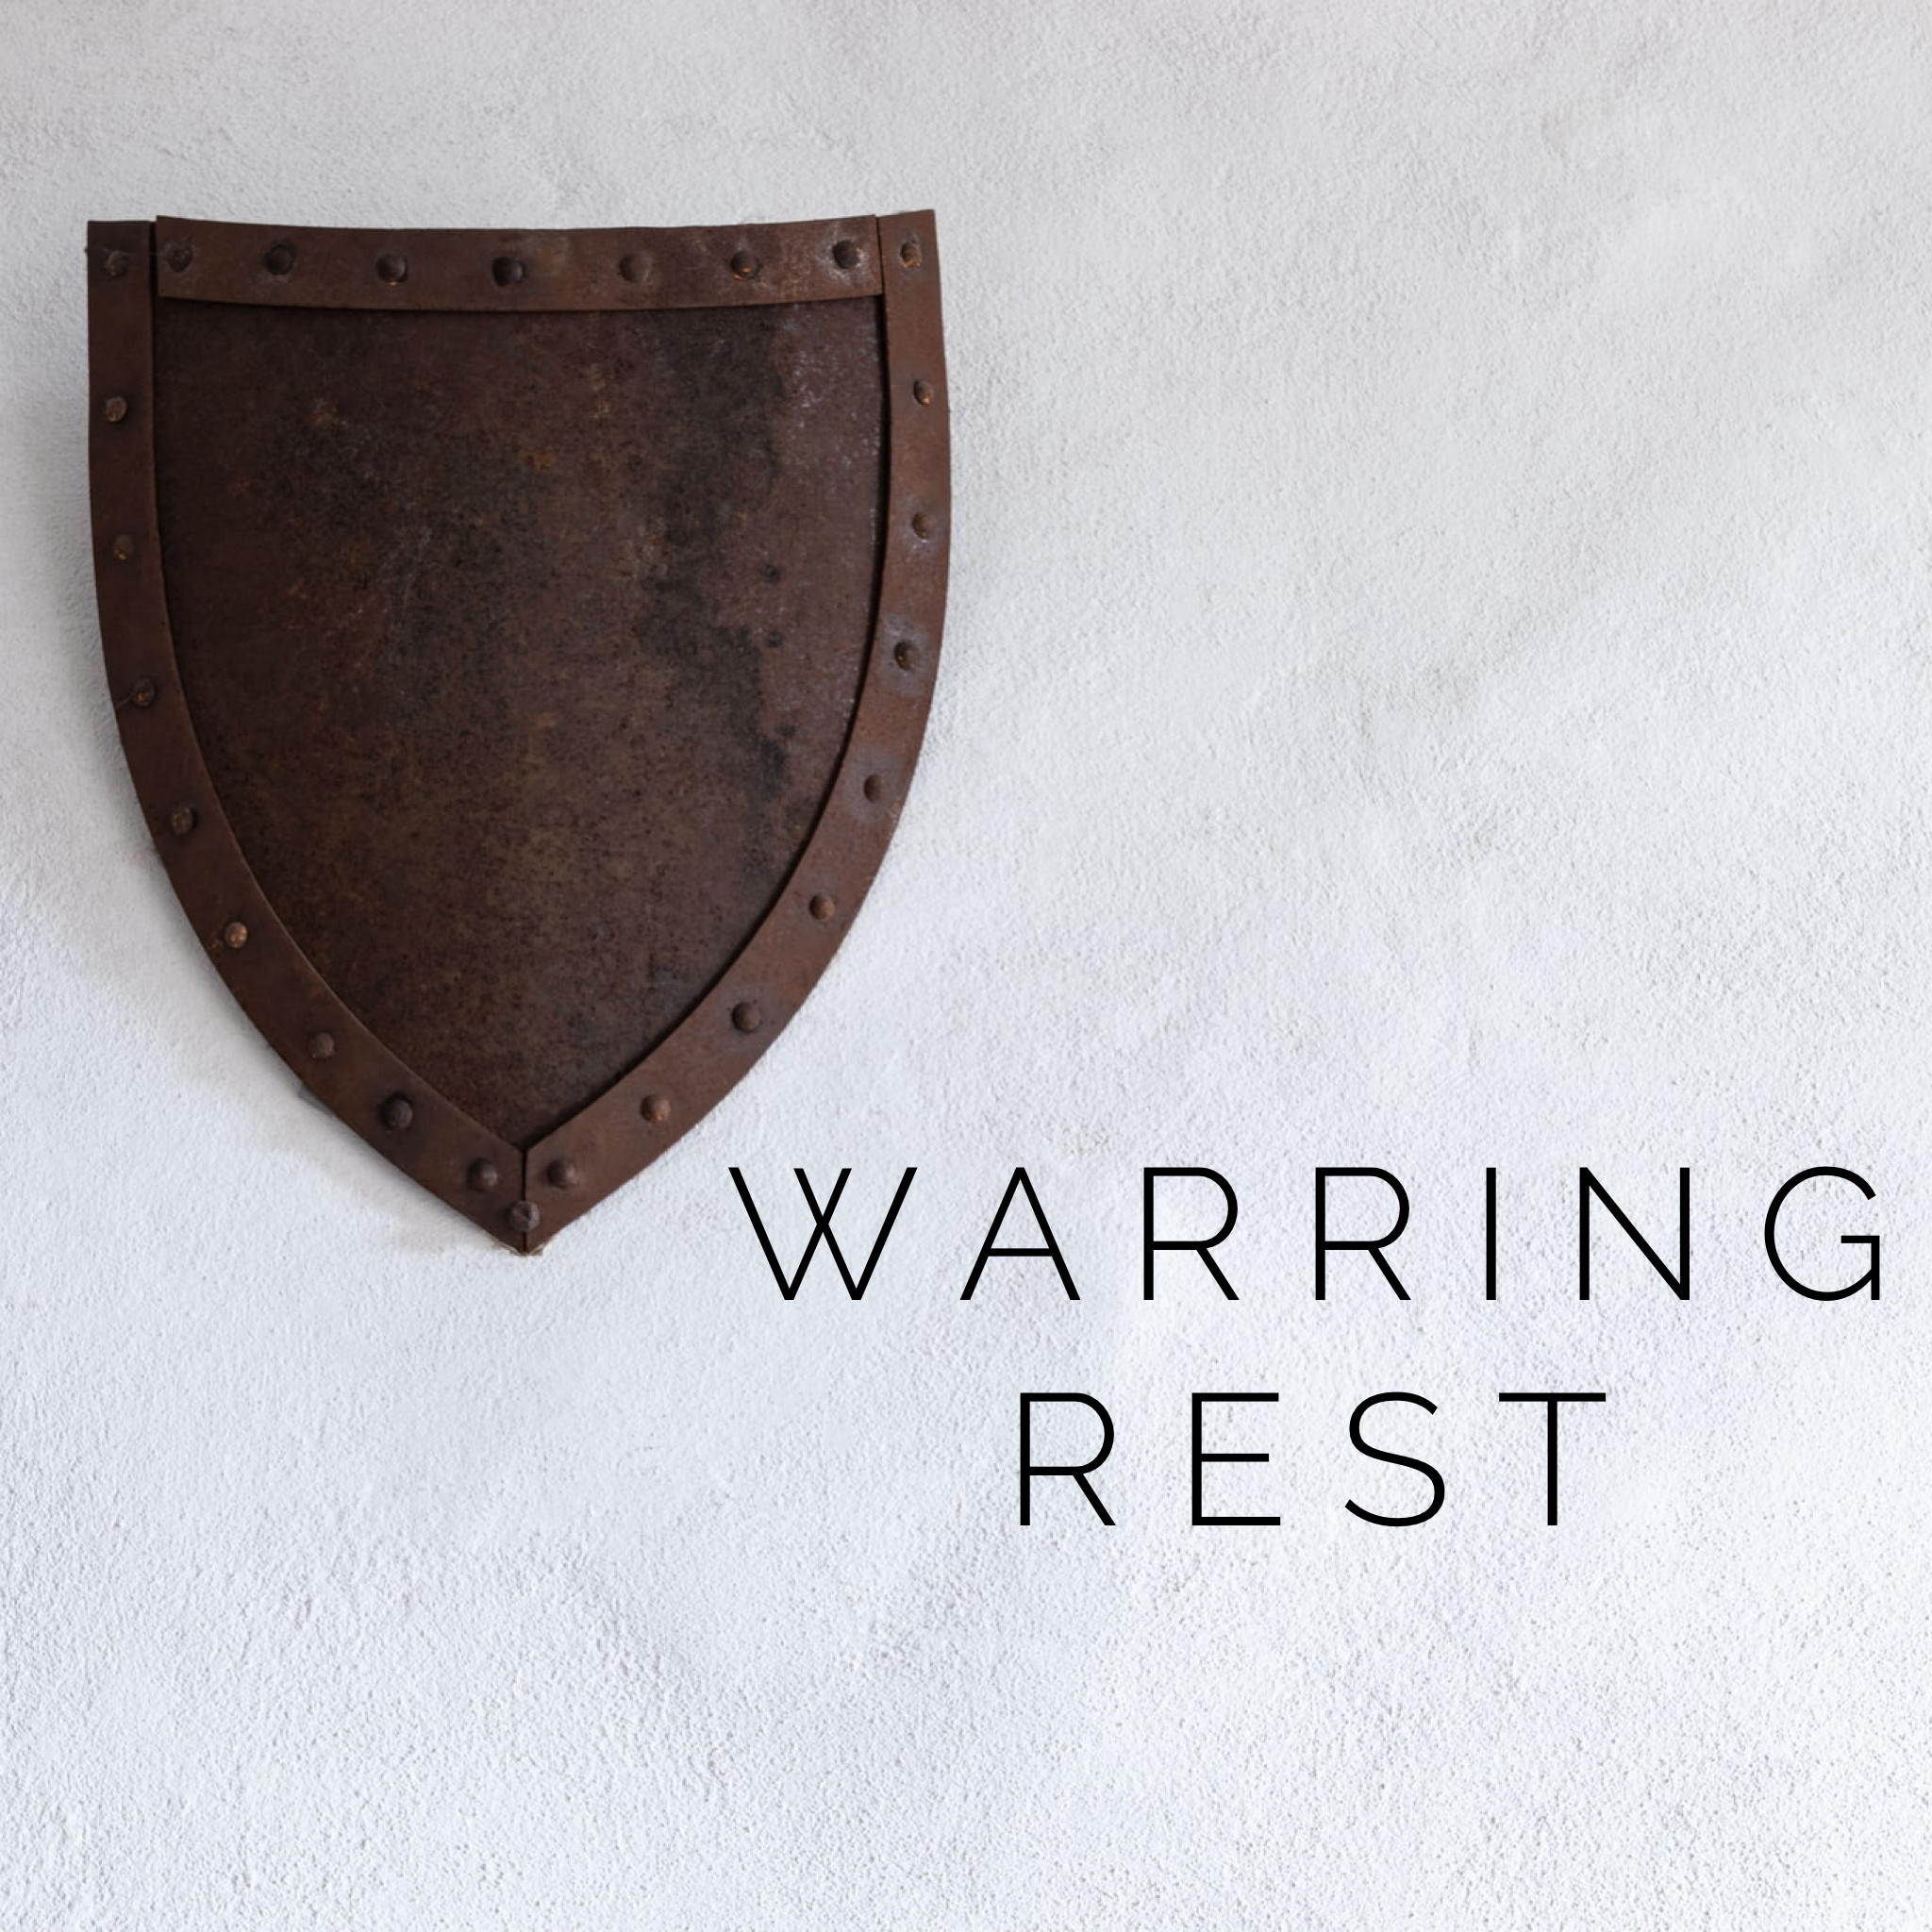 Warring Rest - 12/20/19